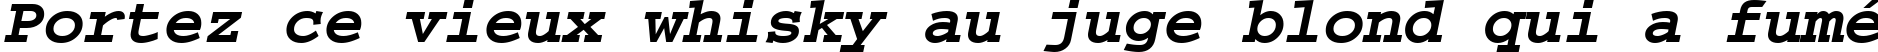 Пример написания шрифтом CourierPS Bold Oblique текста на французском